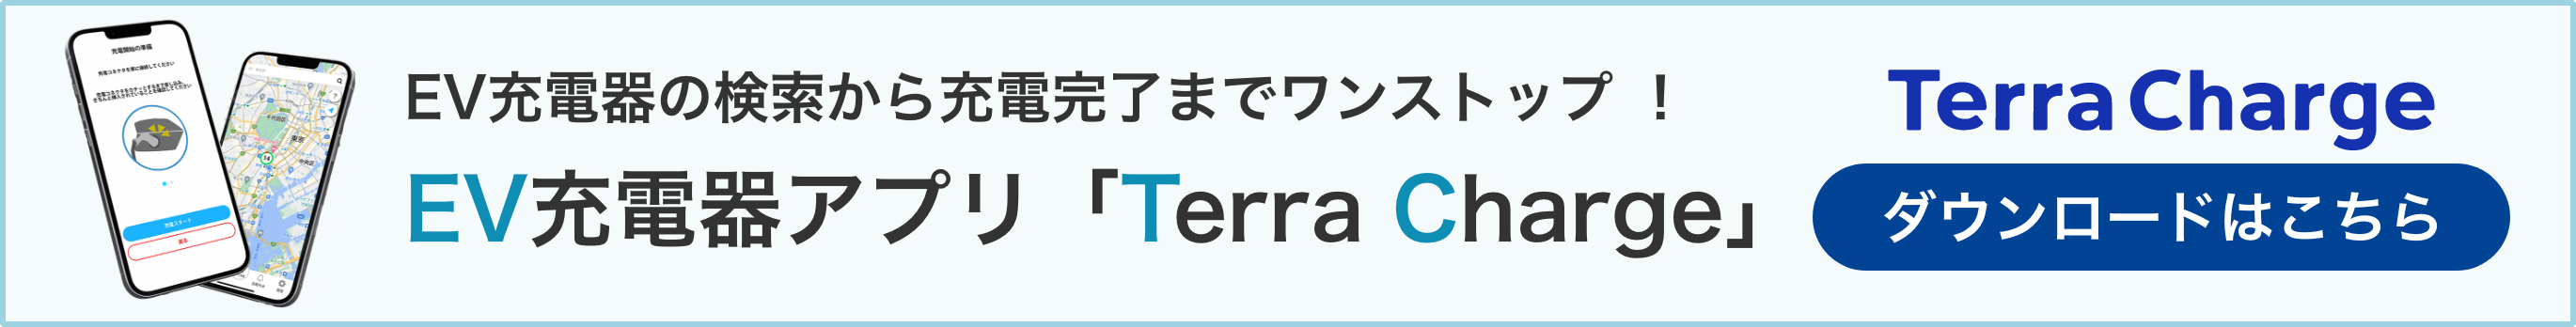 EV充電器アプリ「Terra Charge」